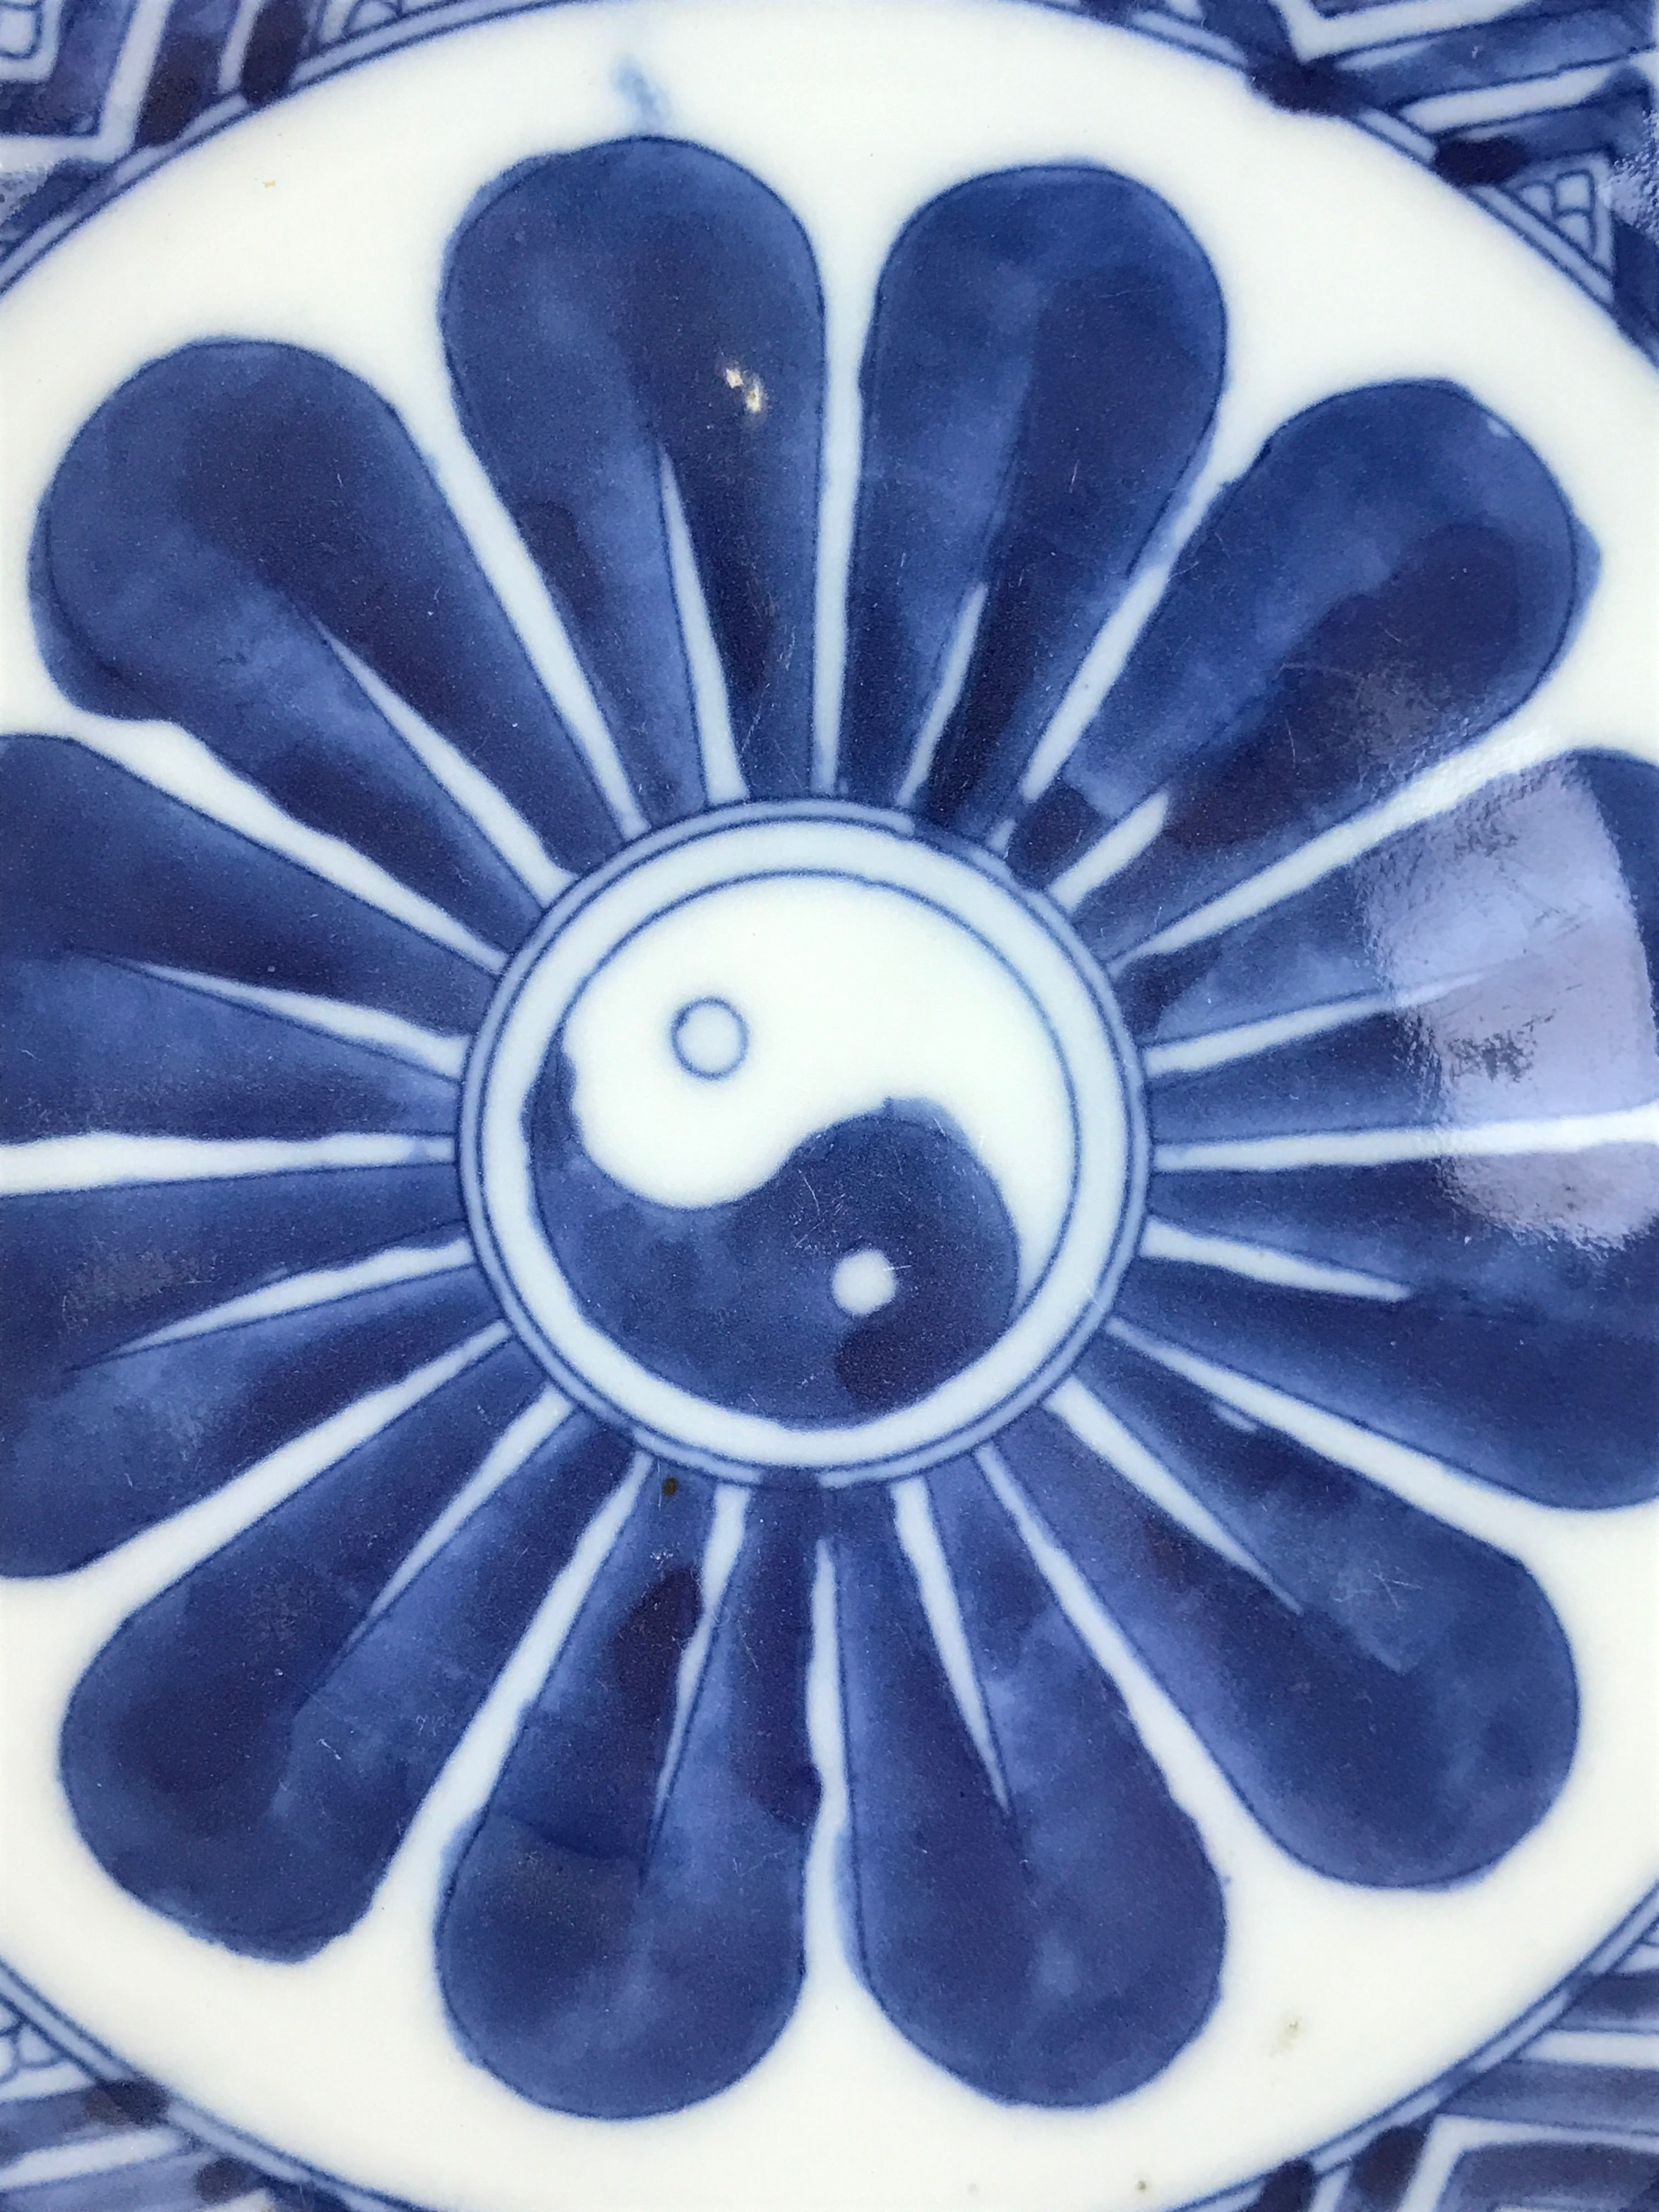 Antique Japanese Porcelain Small Bowl Plate Blue Sometsuke Flower Kozara PY310